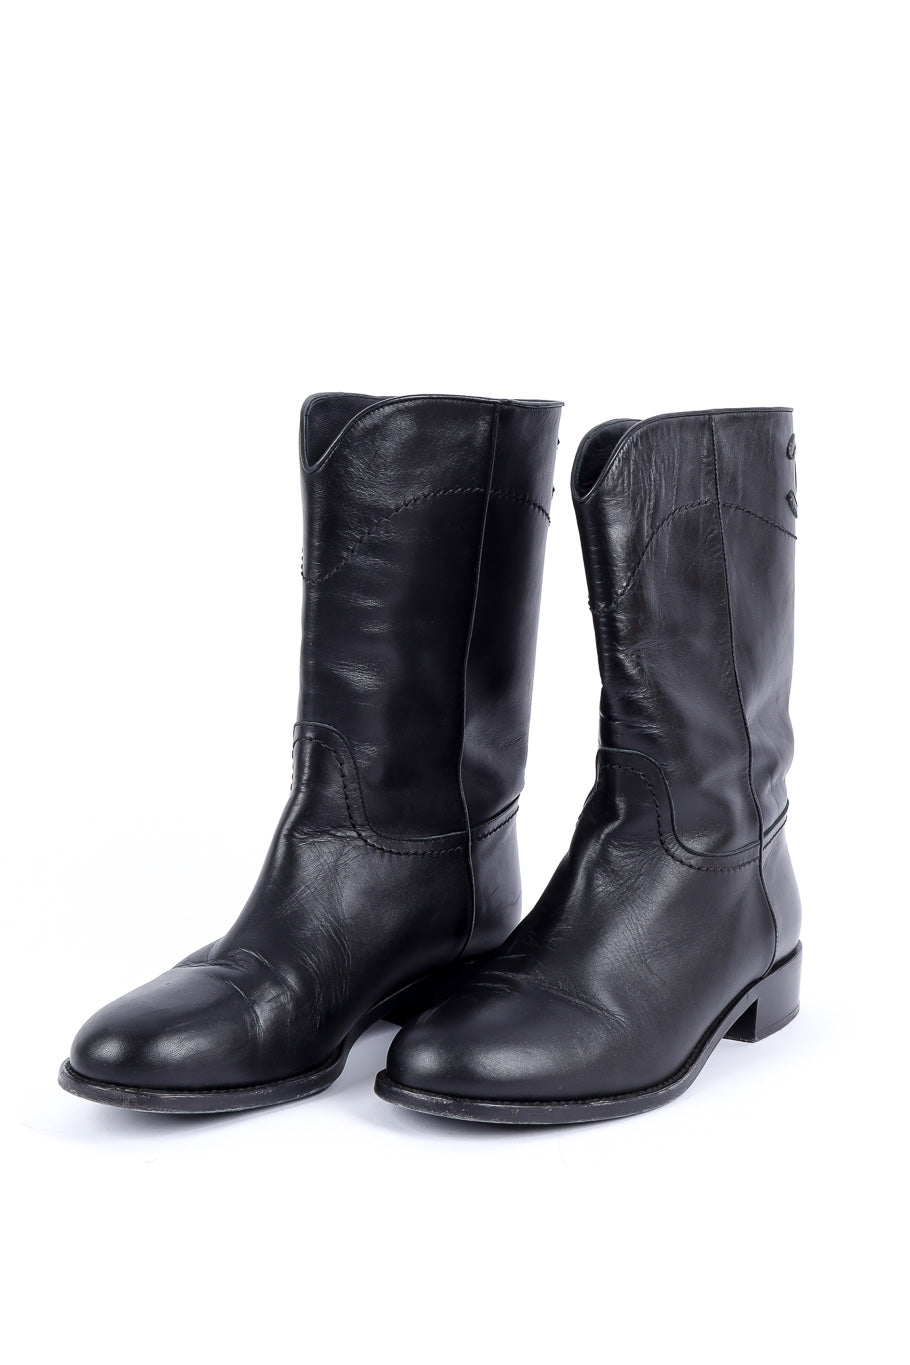 Chanel interlocking CC mid-calf boots product shot @recessla